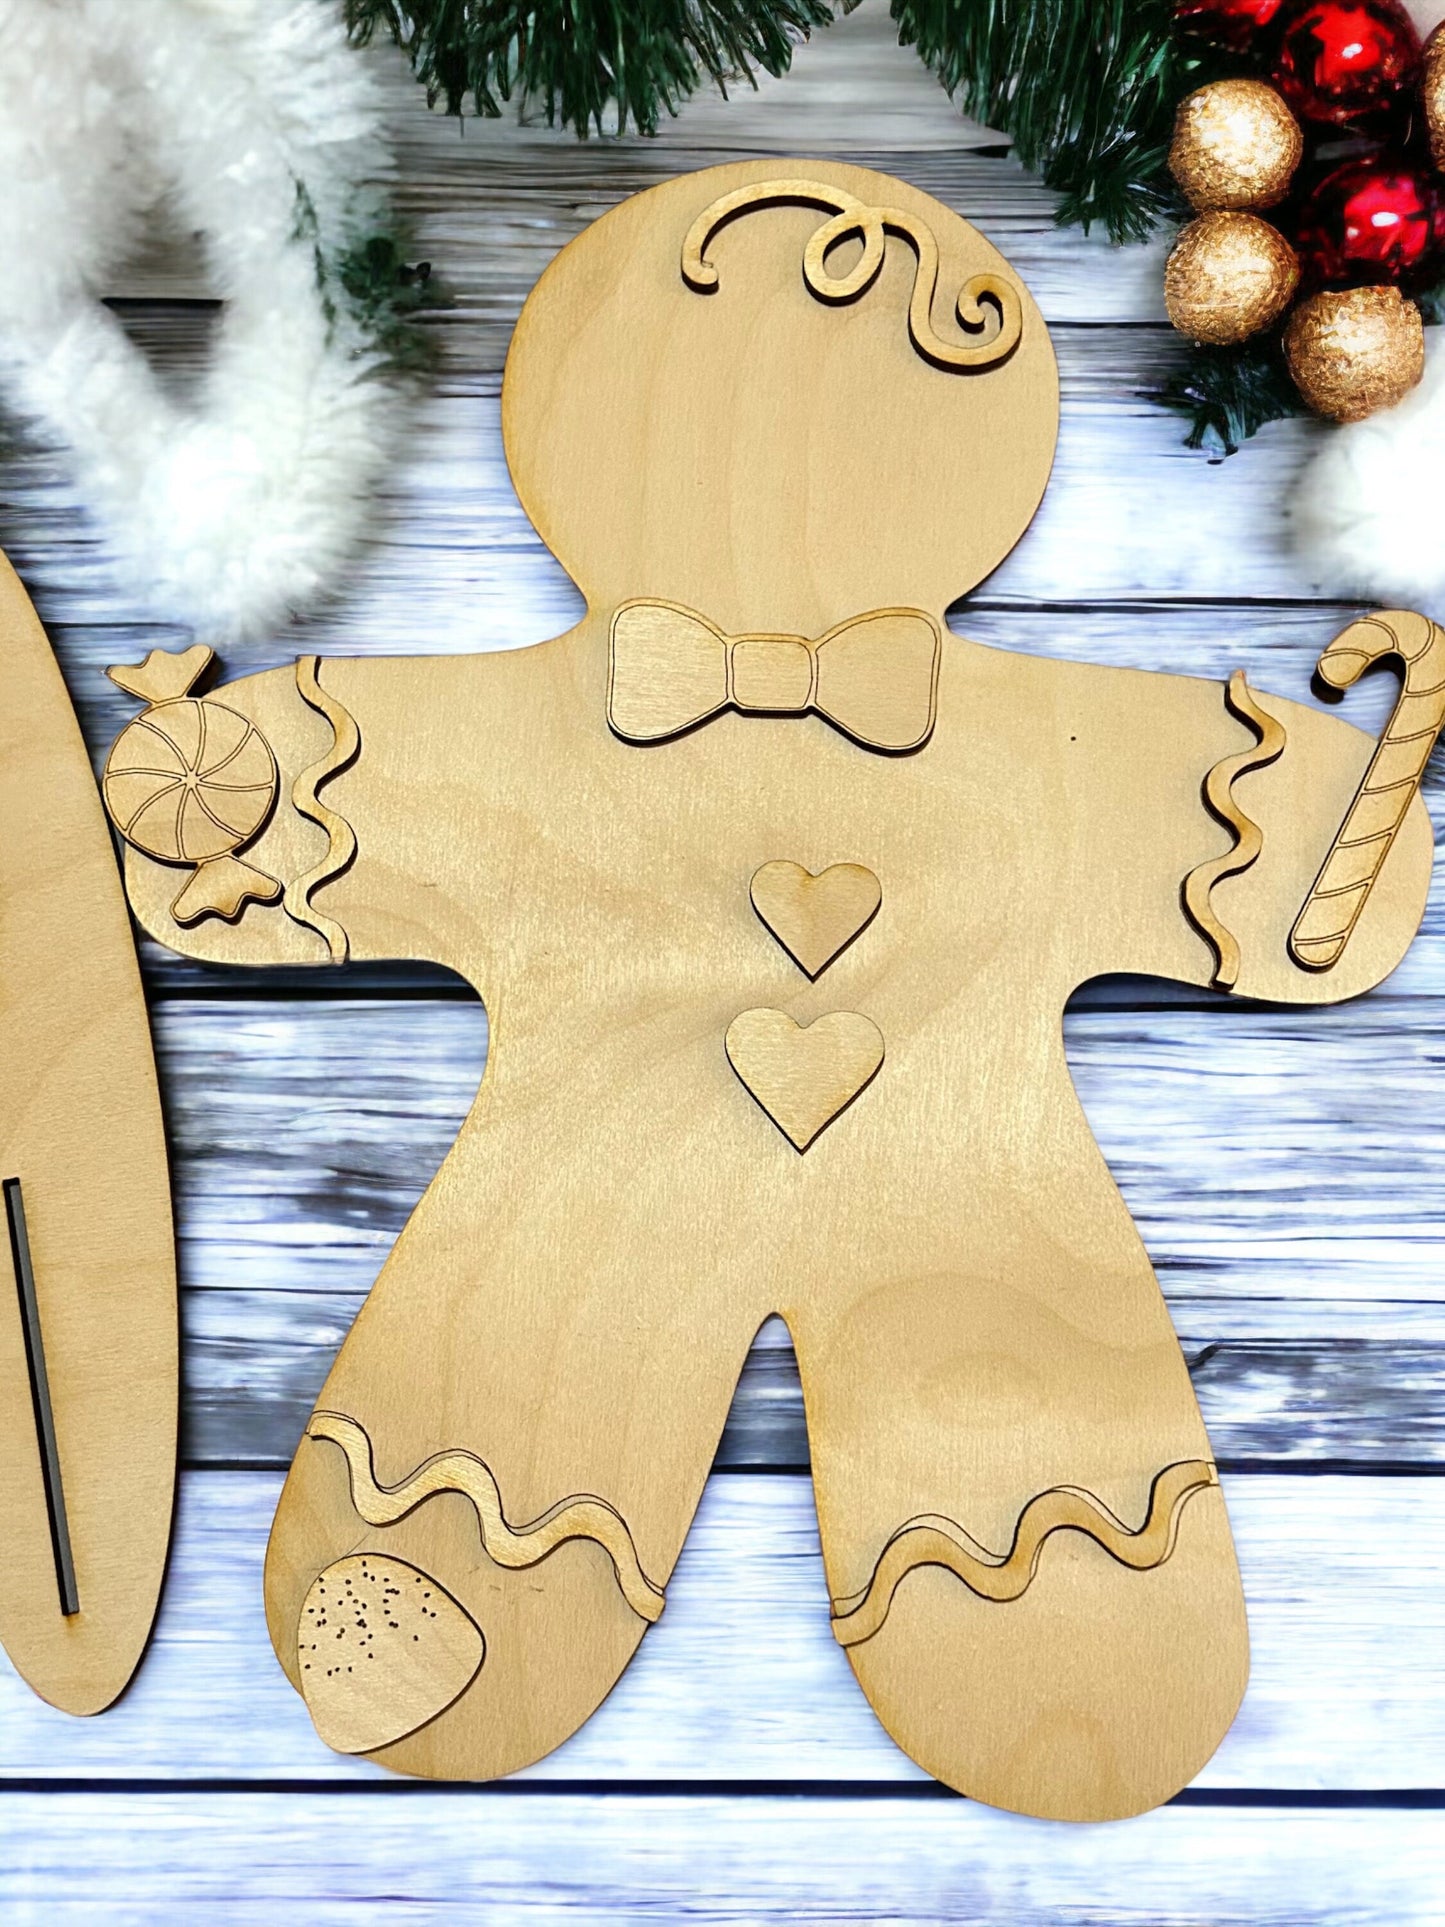 DIY Gingerbread Man/Woman Unpainted (LARGE SIZE)